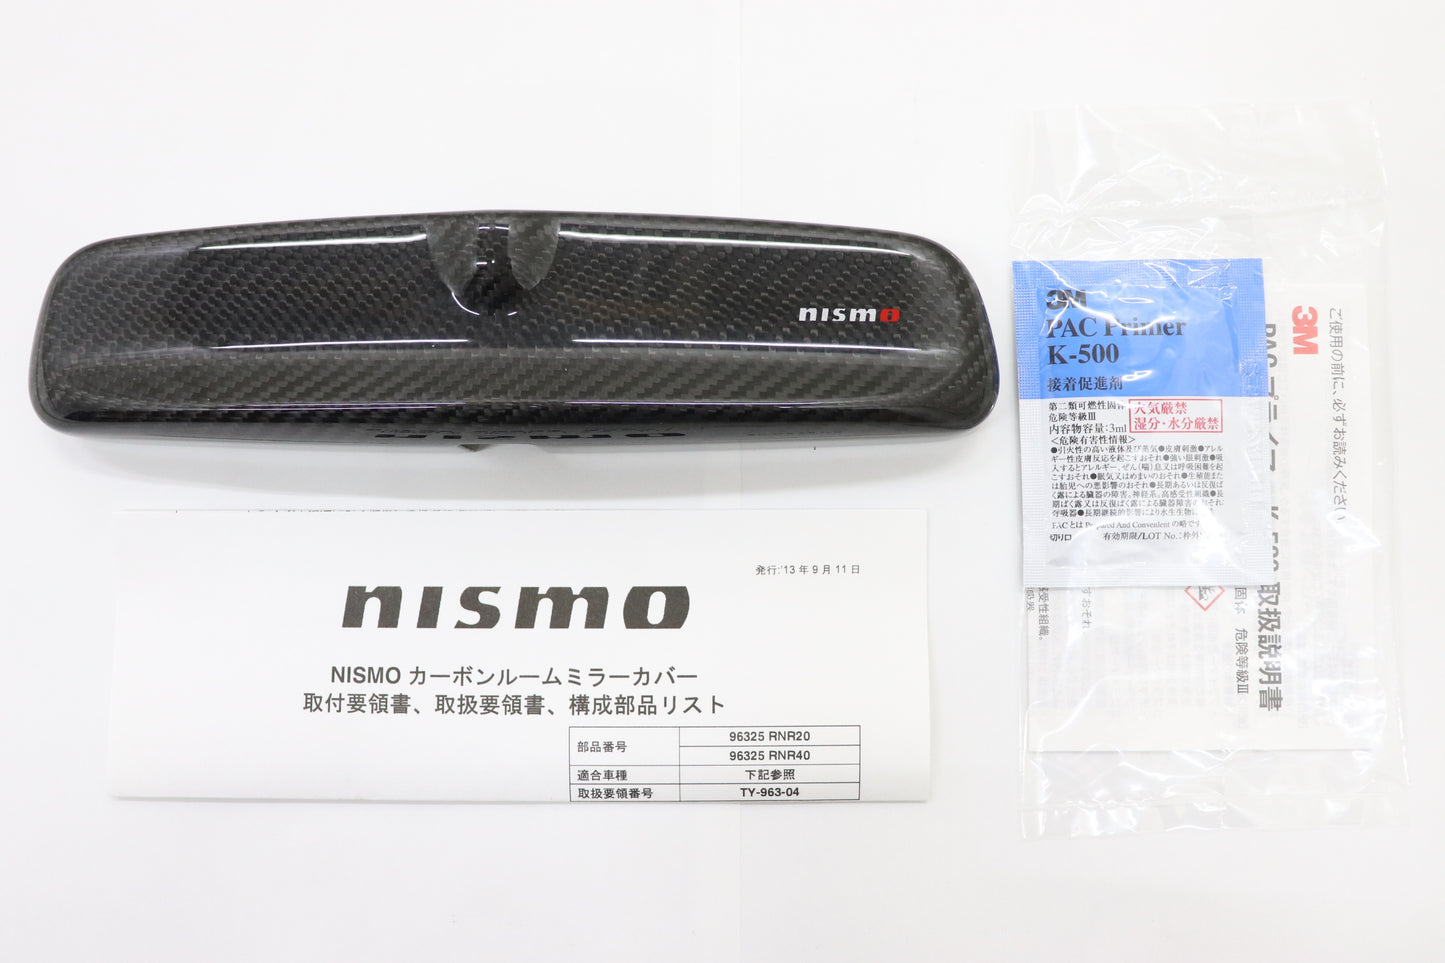 NISMO Carbon Fiber Rear View Mirror Cover - BNR32 BCNR33 Late Model #660111030